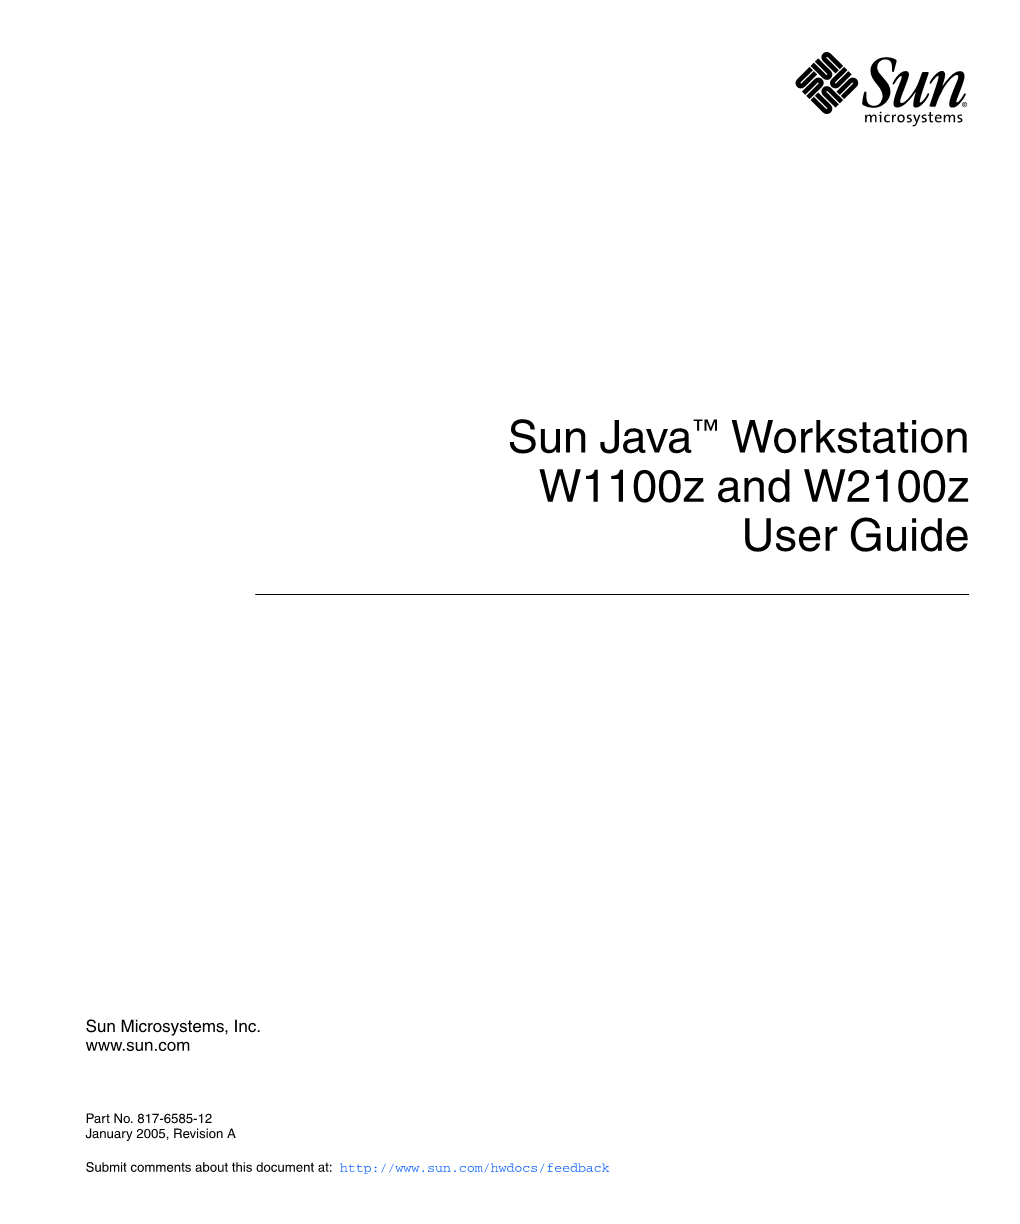 Sun Java Workstation W1100z and W2100z User Guide •January 2005